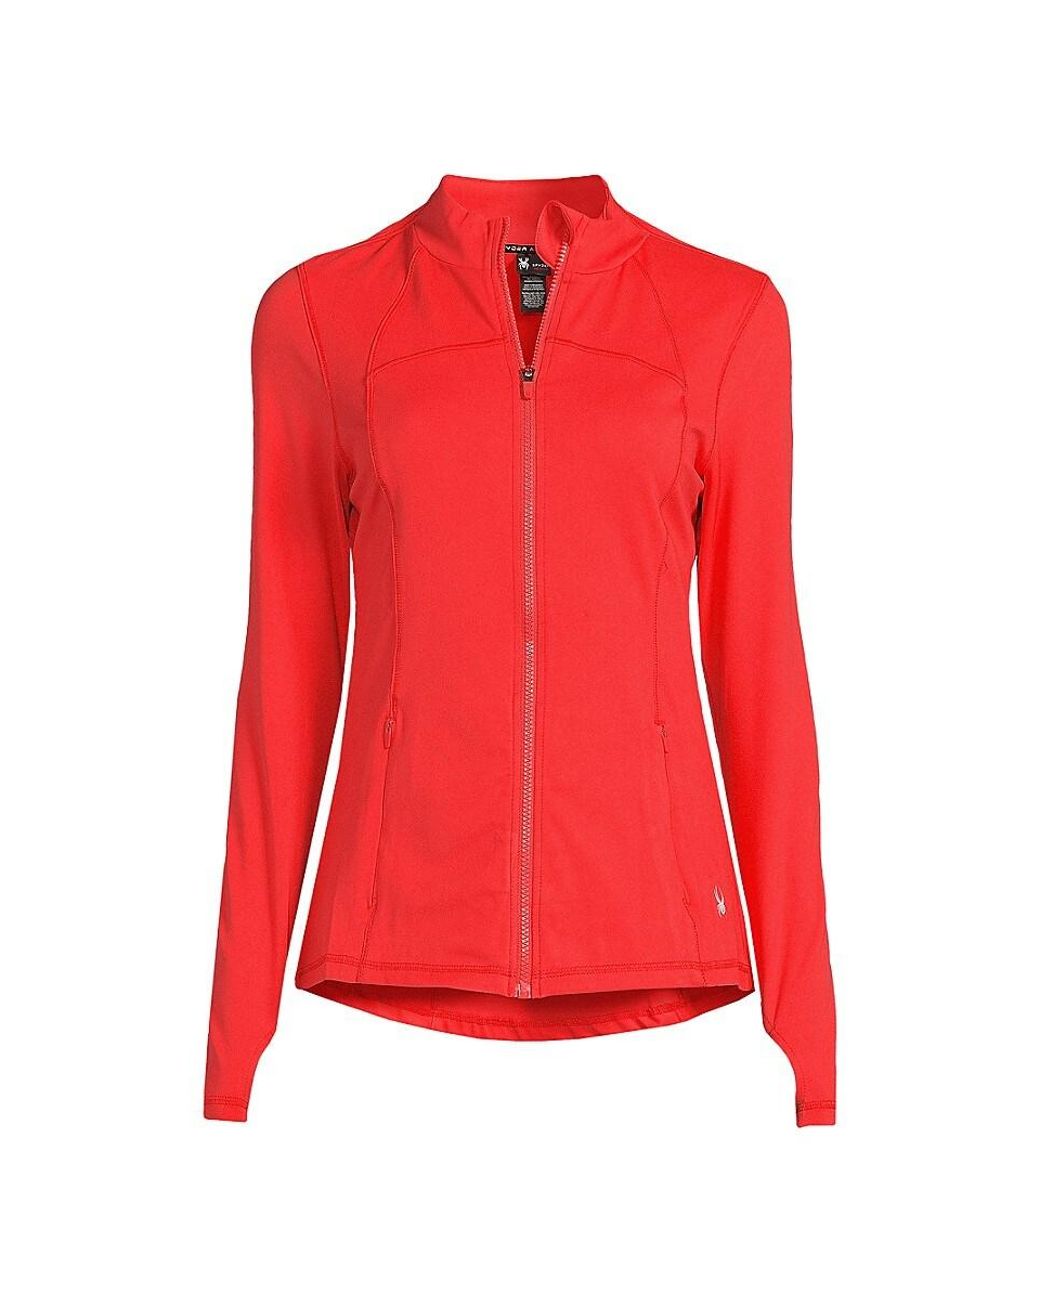 Spyder Women's Mock Neck Full Zip Long Sleeve Activewear Jacket